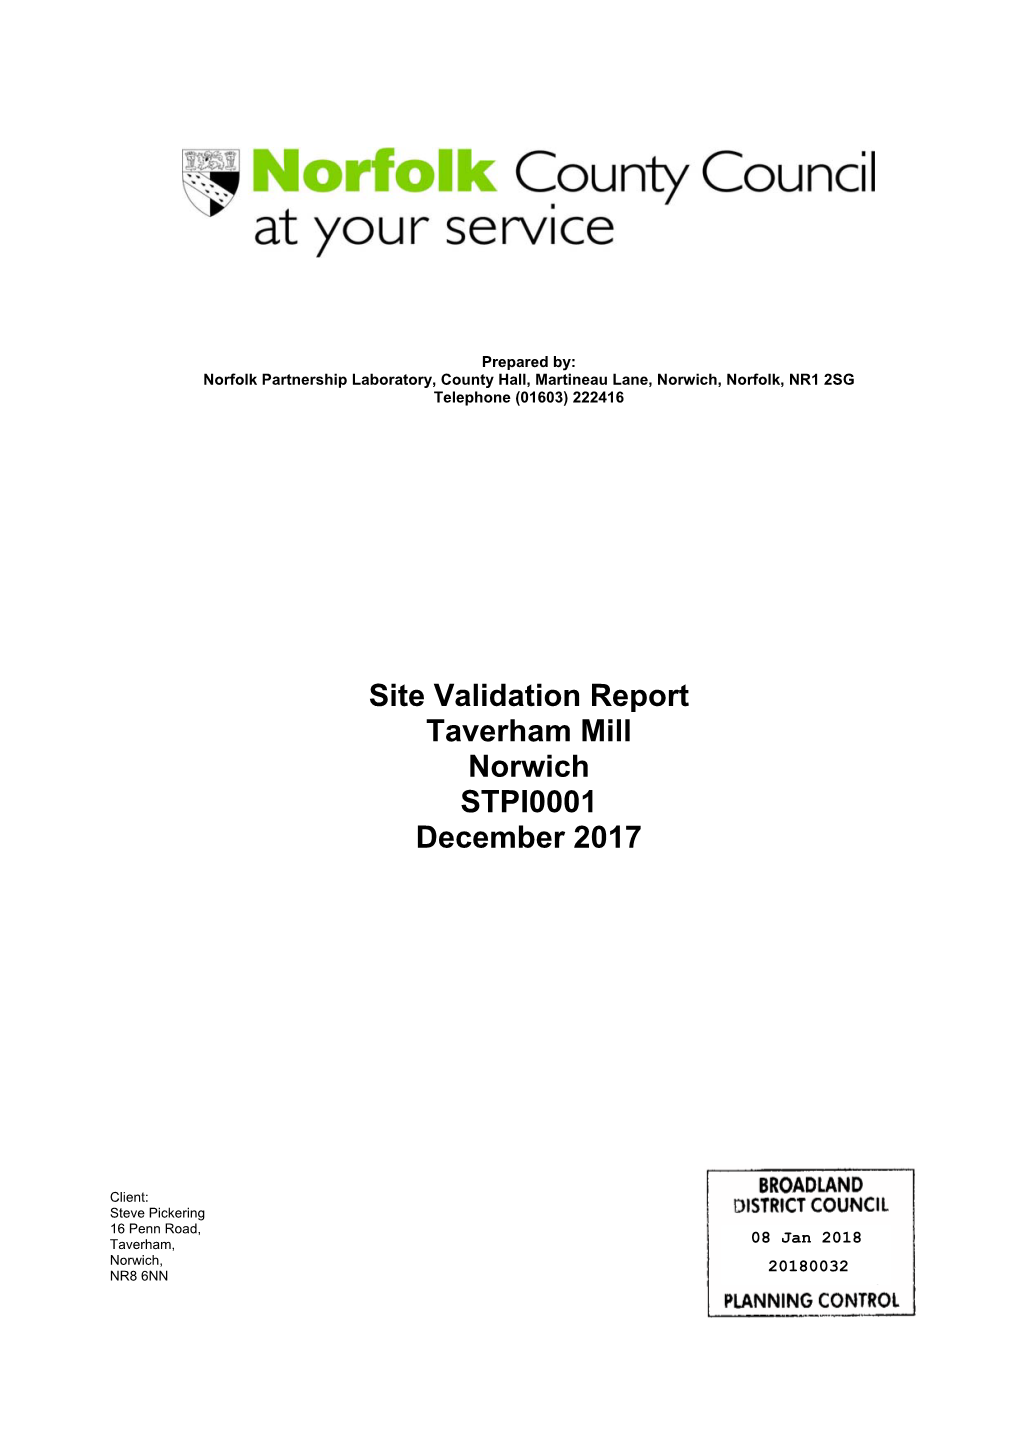 Site Validation Report Taverham Mill Norwich STPI0001 December 2017